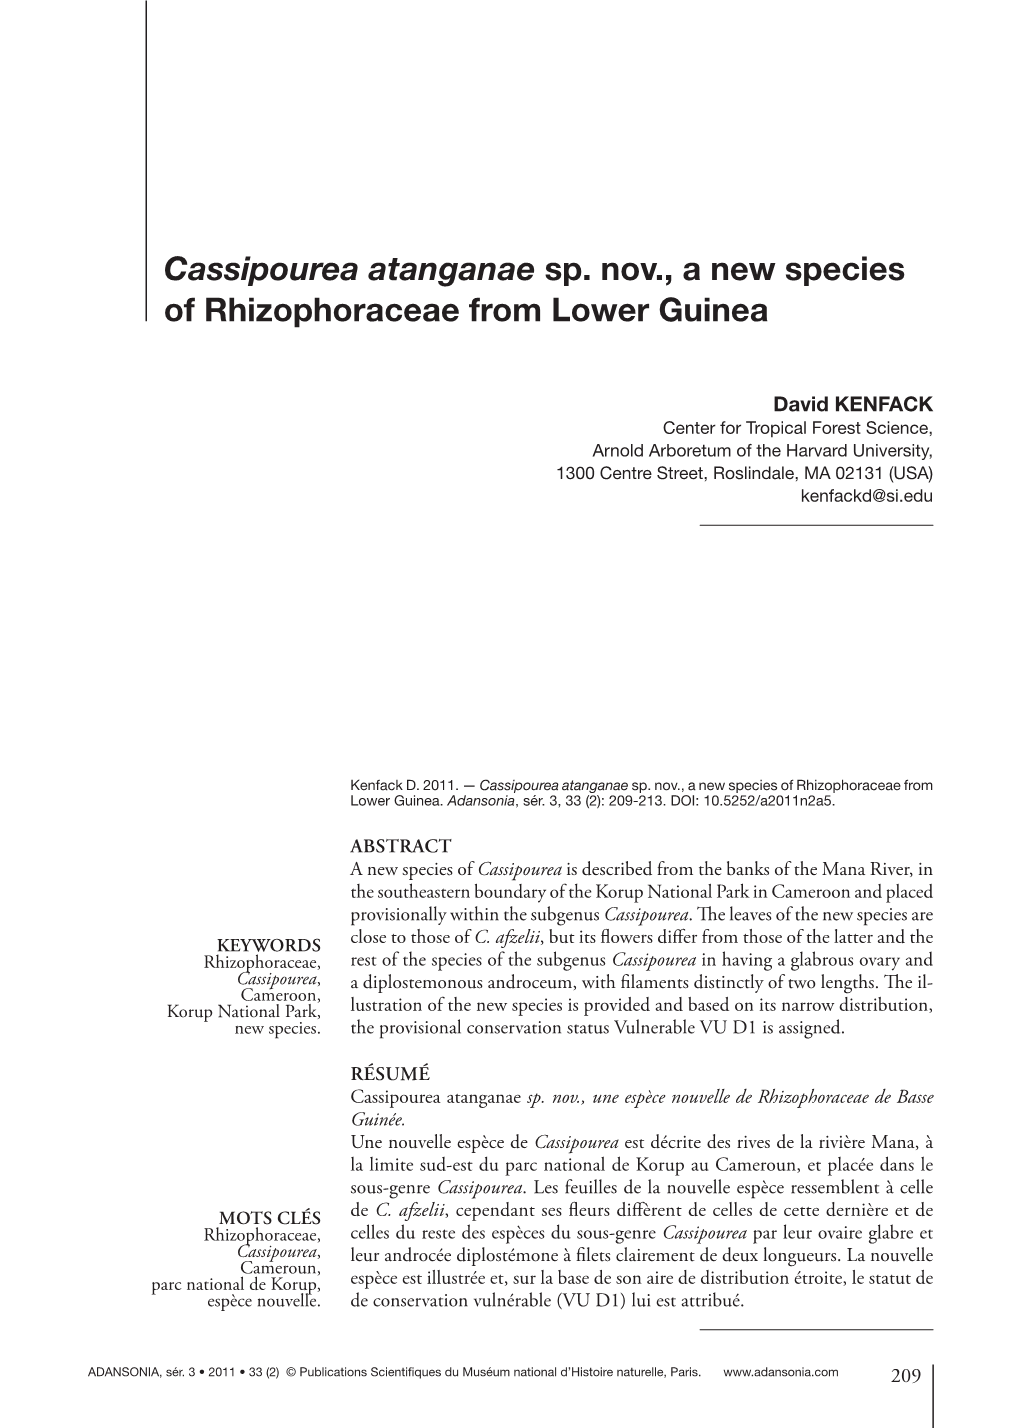 Cassipourea Atanganae Sp. Nov., a New Species of Rhizophoraceae from Lower Guinea